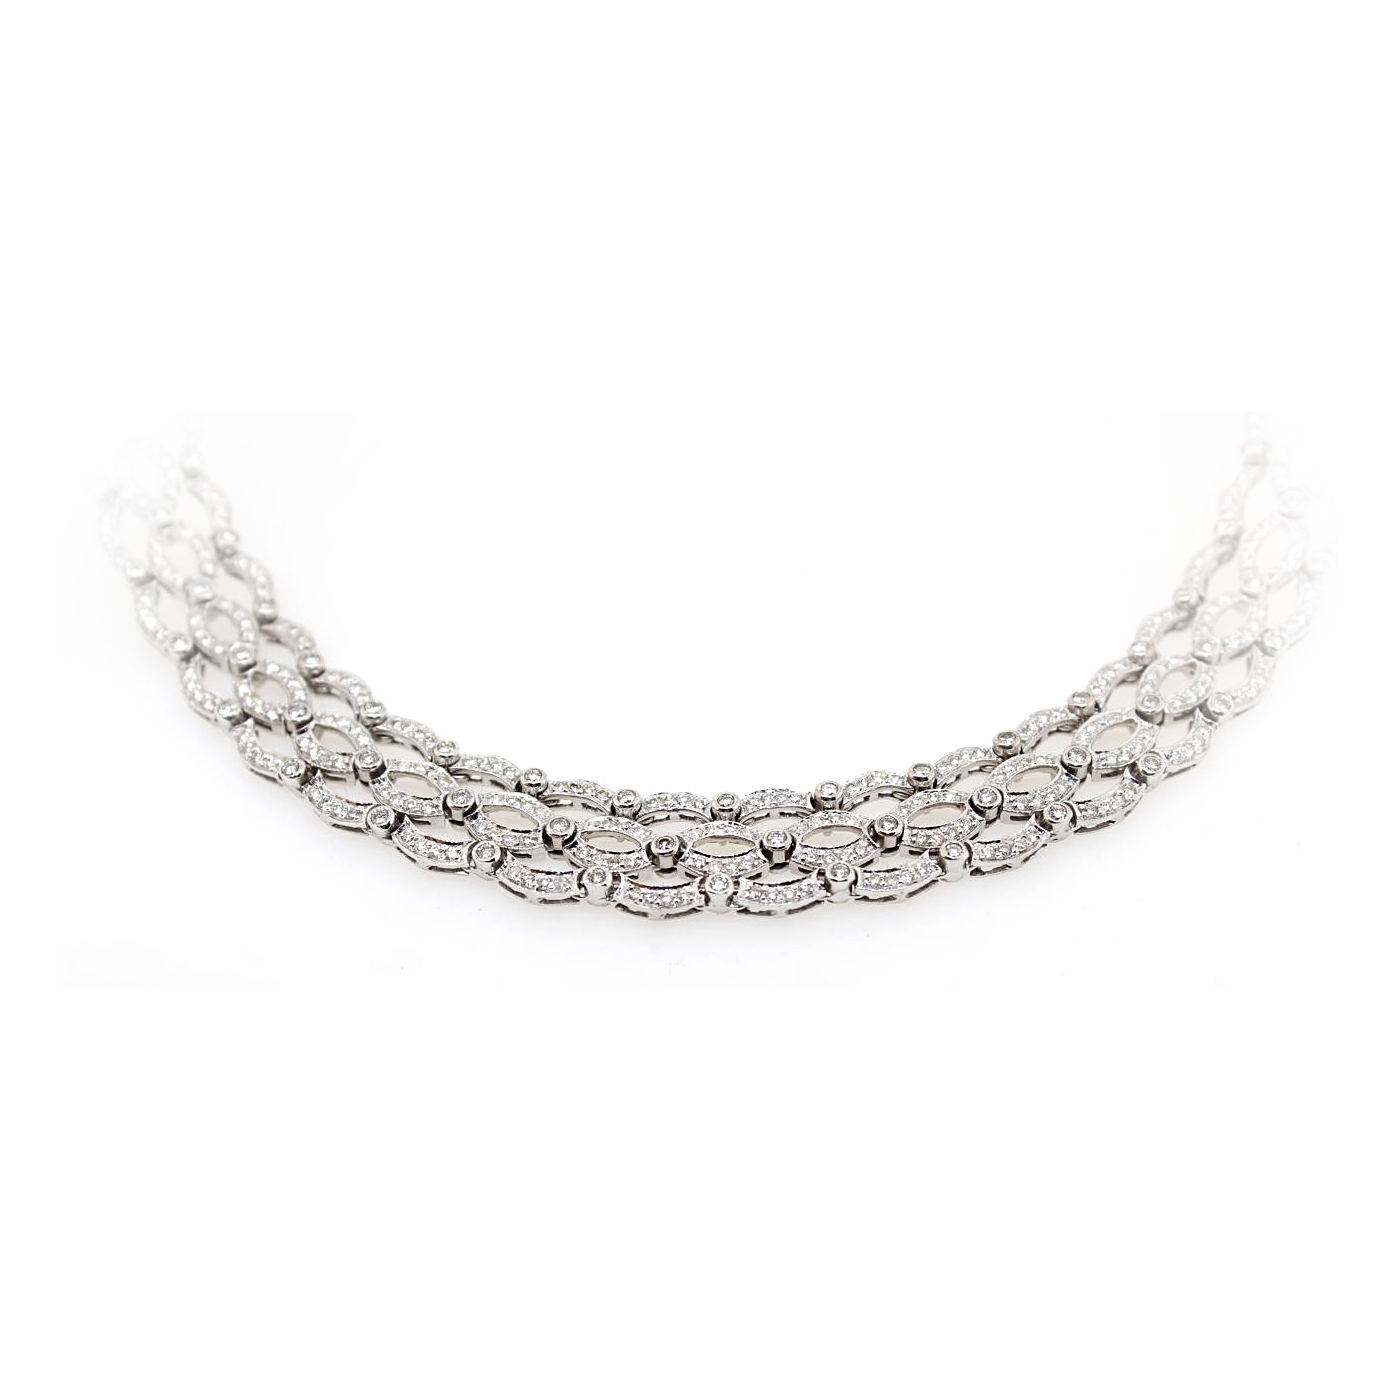 Vintage 18 Karat White Gold Diamond Collar Necklace